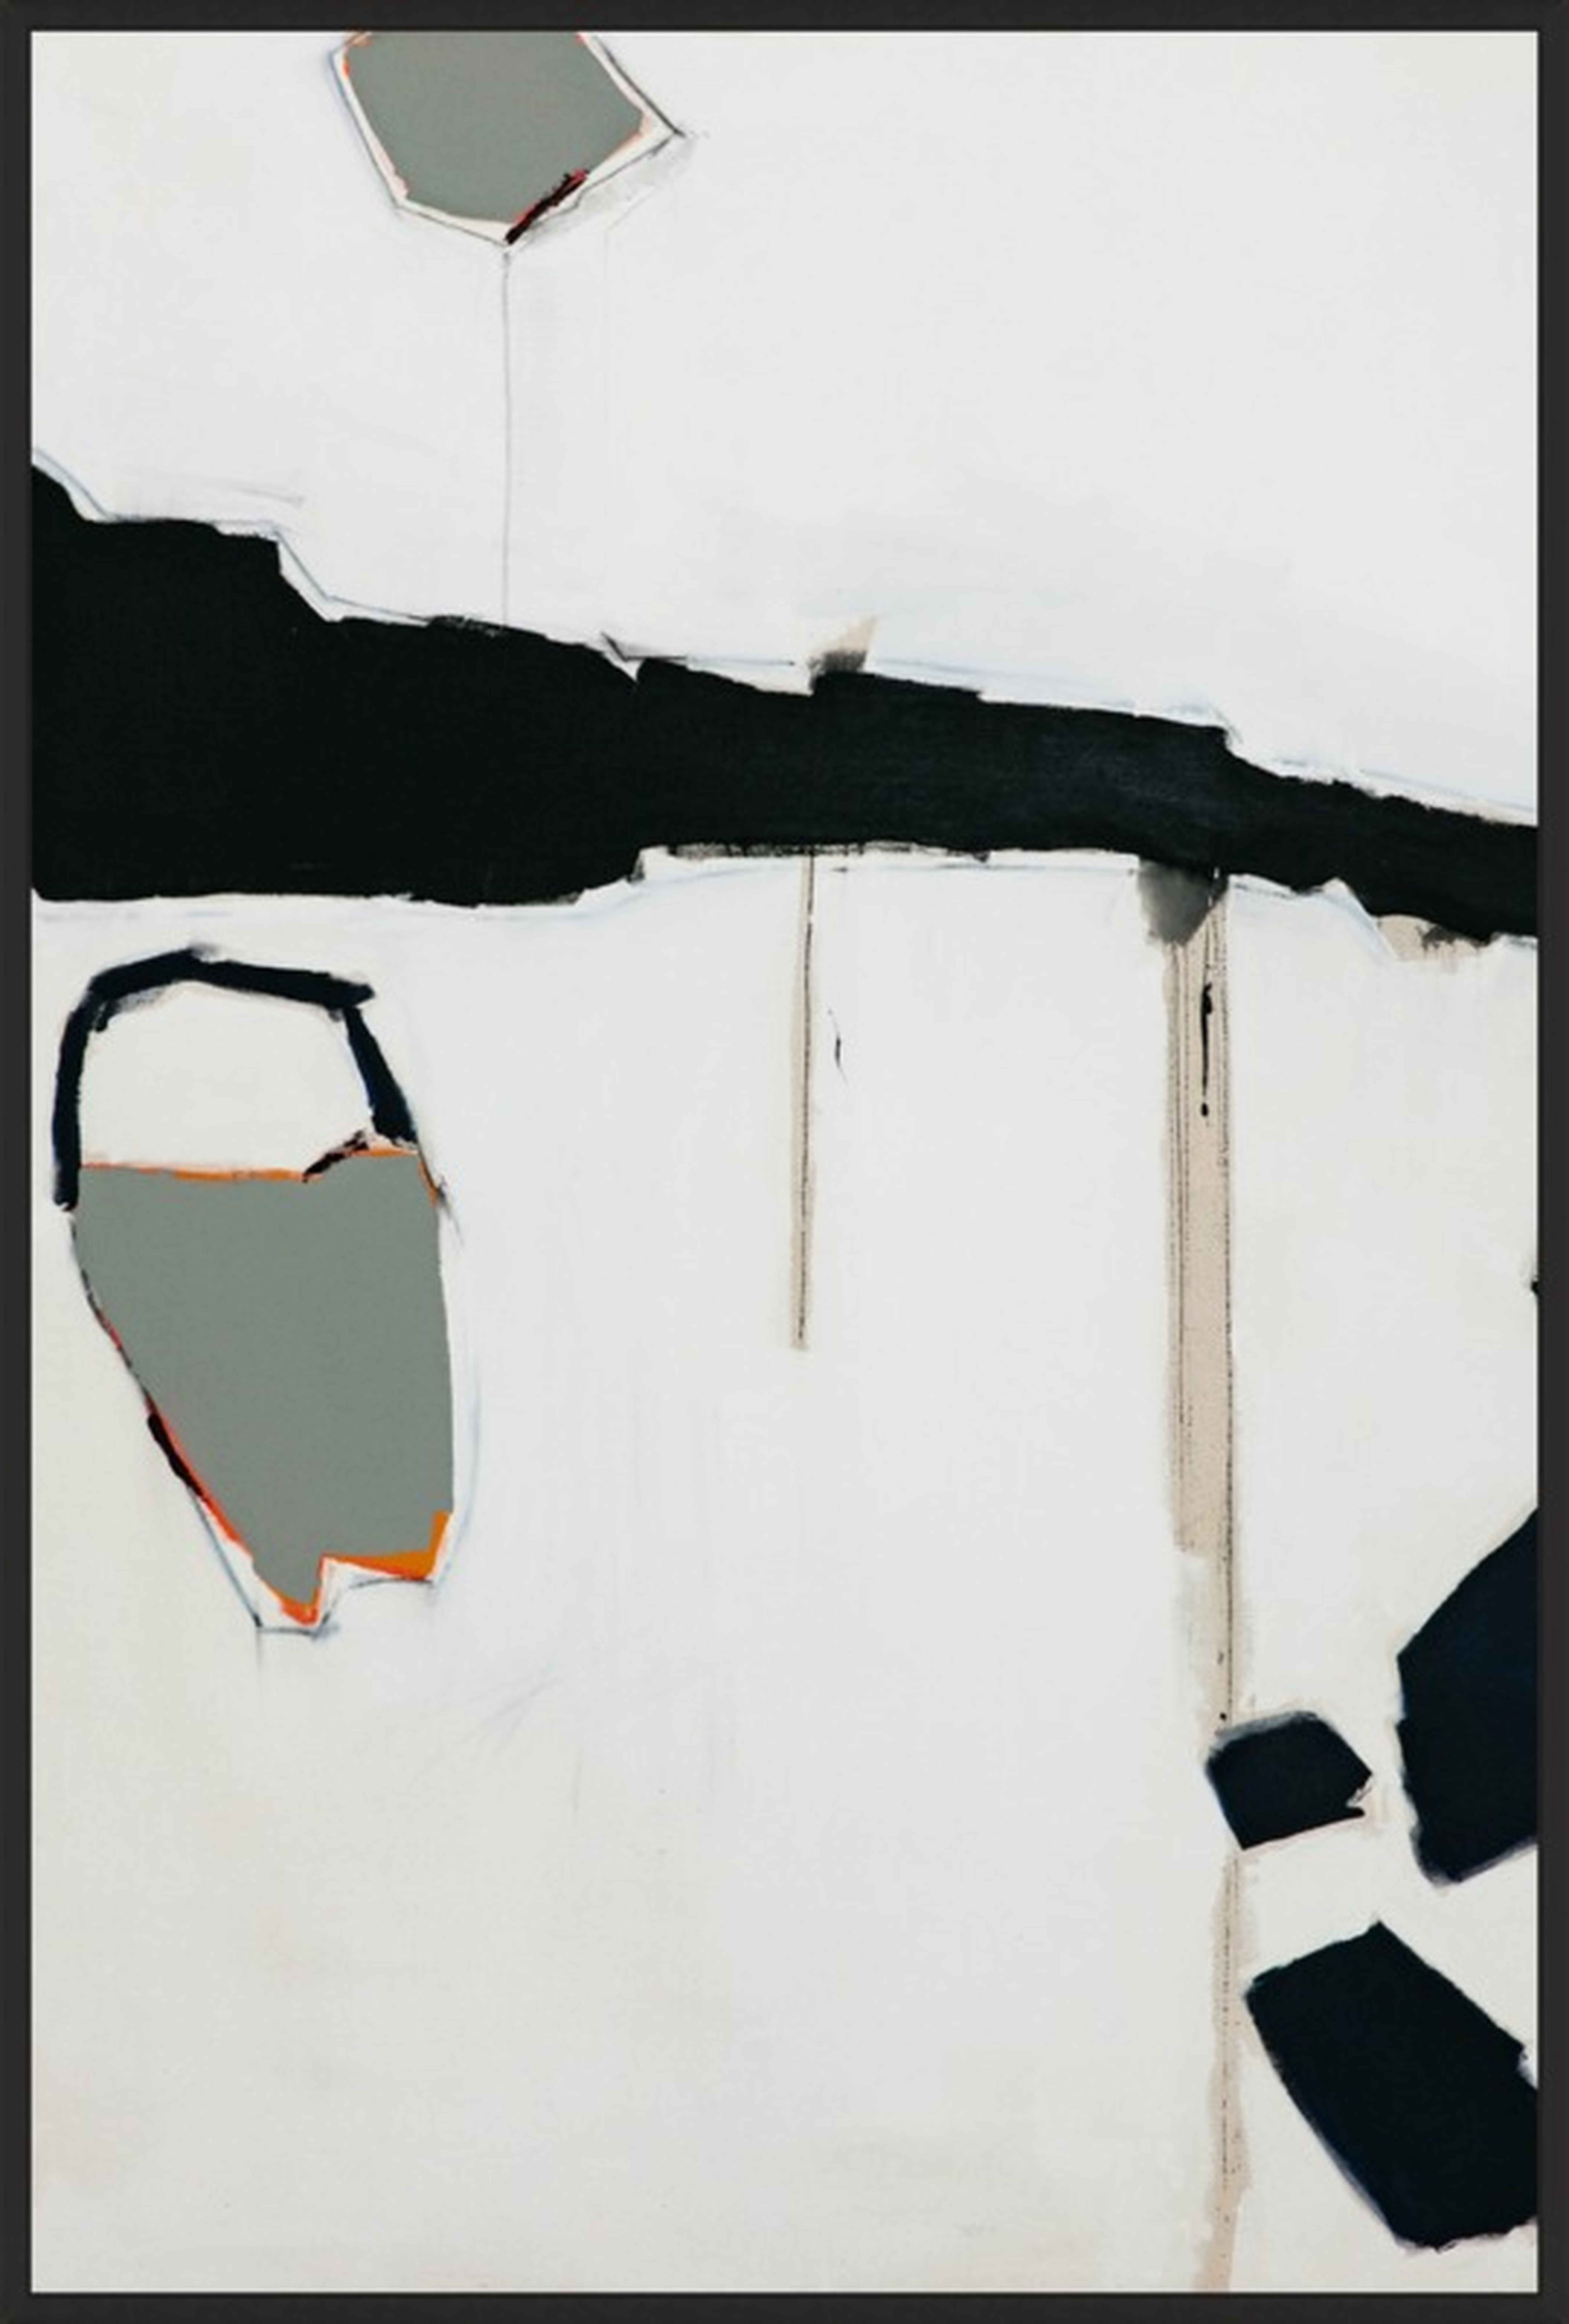 Salta Dominga by Holly Addi for Artfully Walls - Artfully Walls